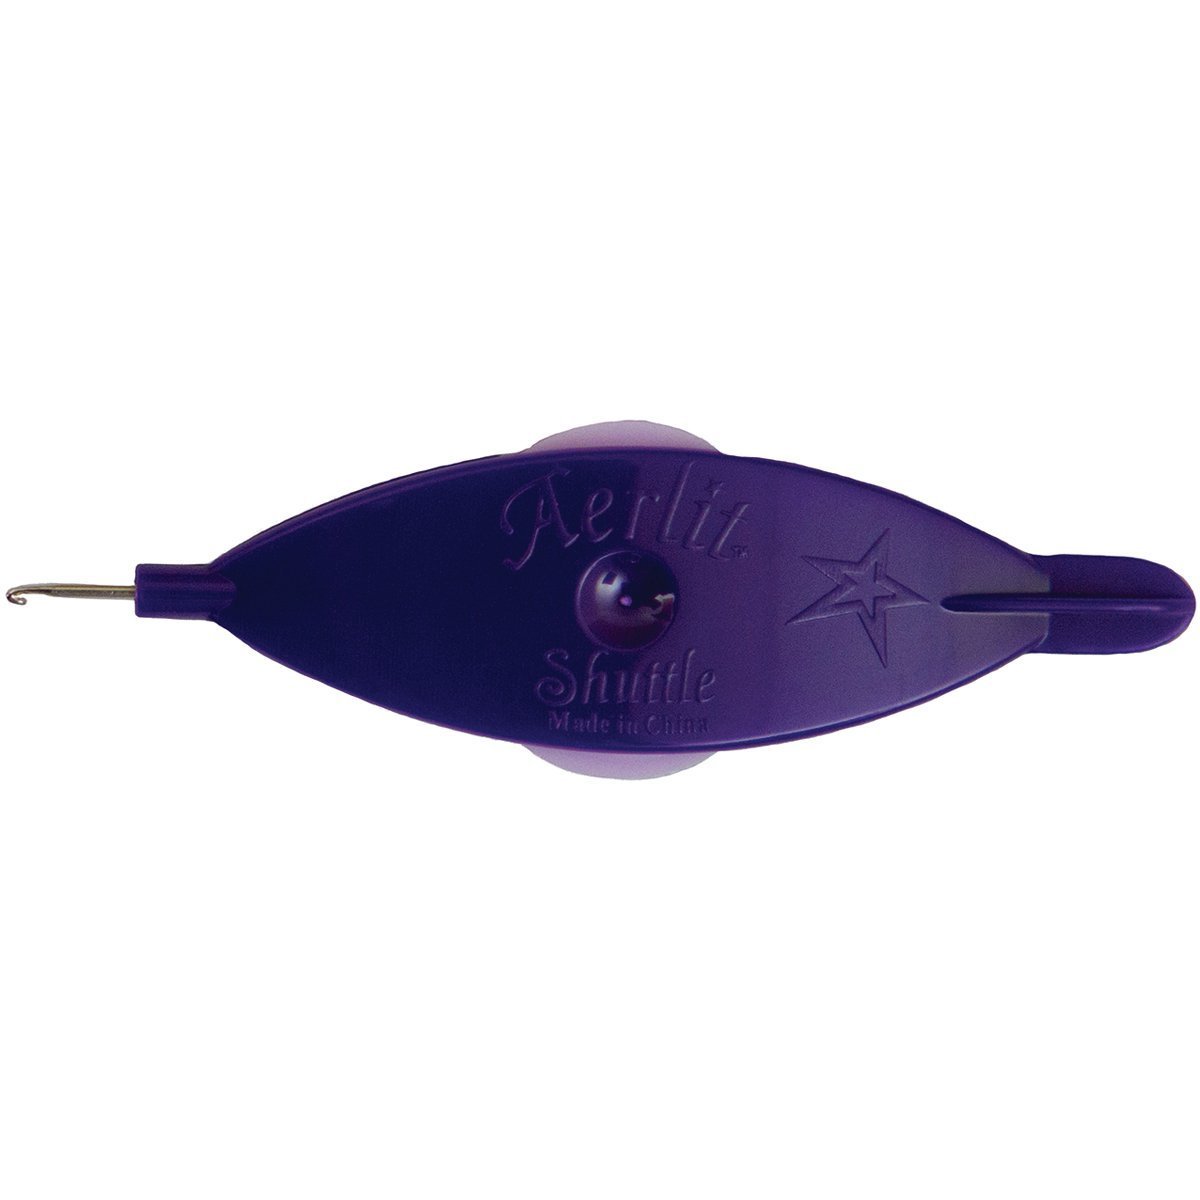 Handy Hands Aerlit Tatting Shuttle with 2 bobbins SHH432, Purple Lilac